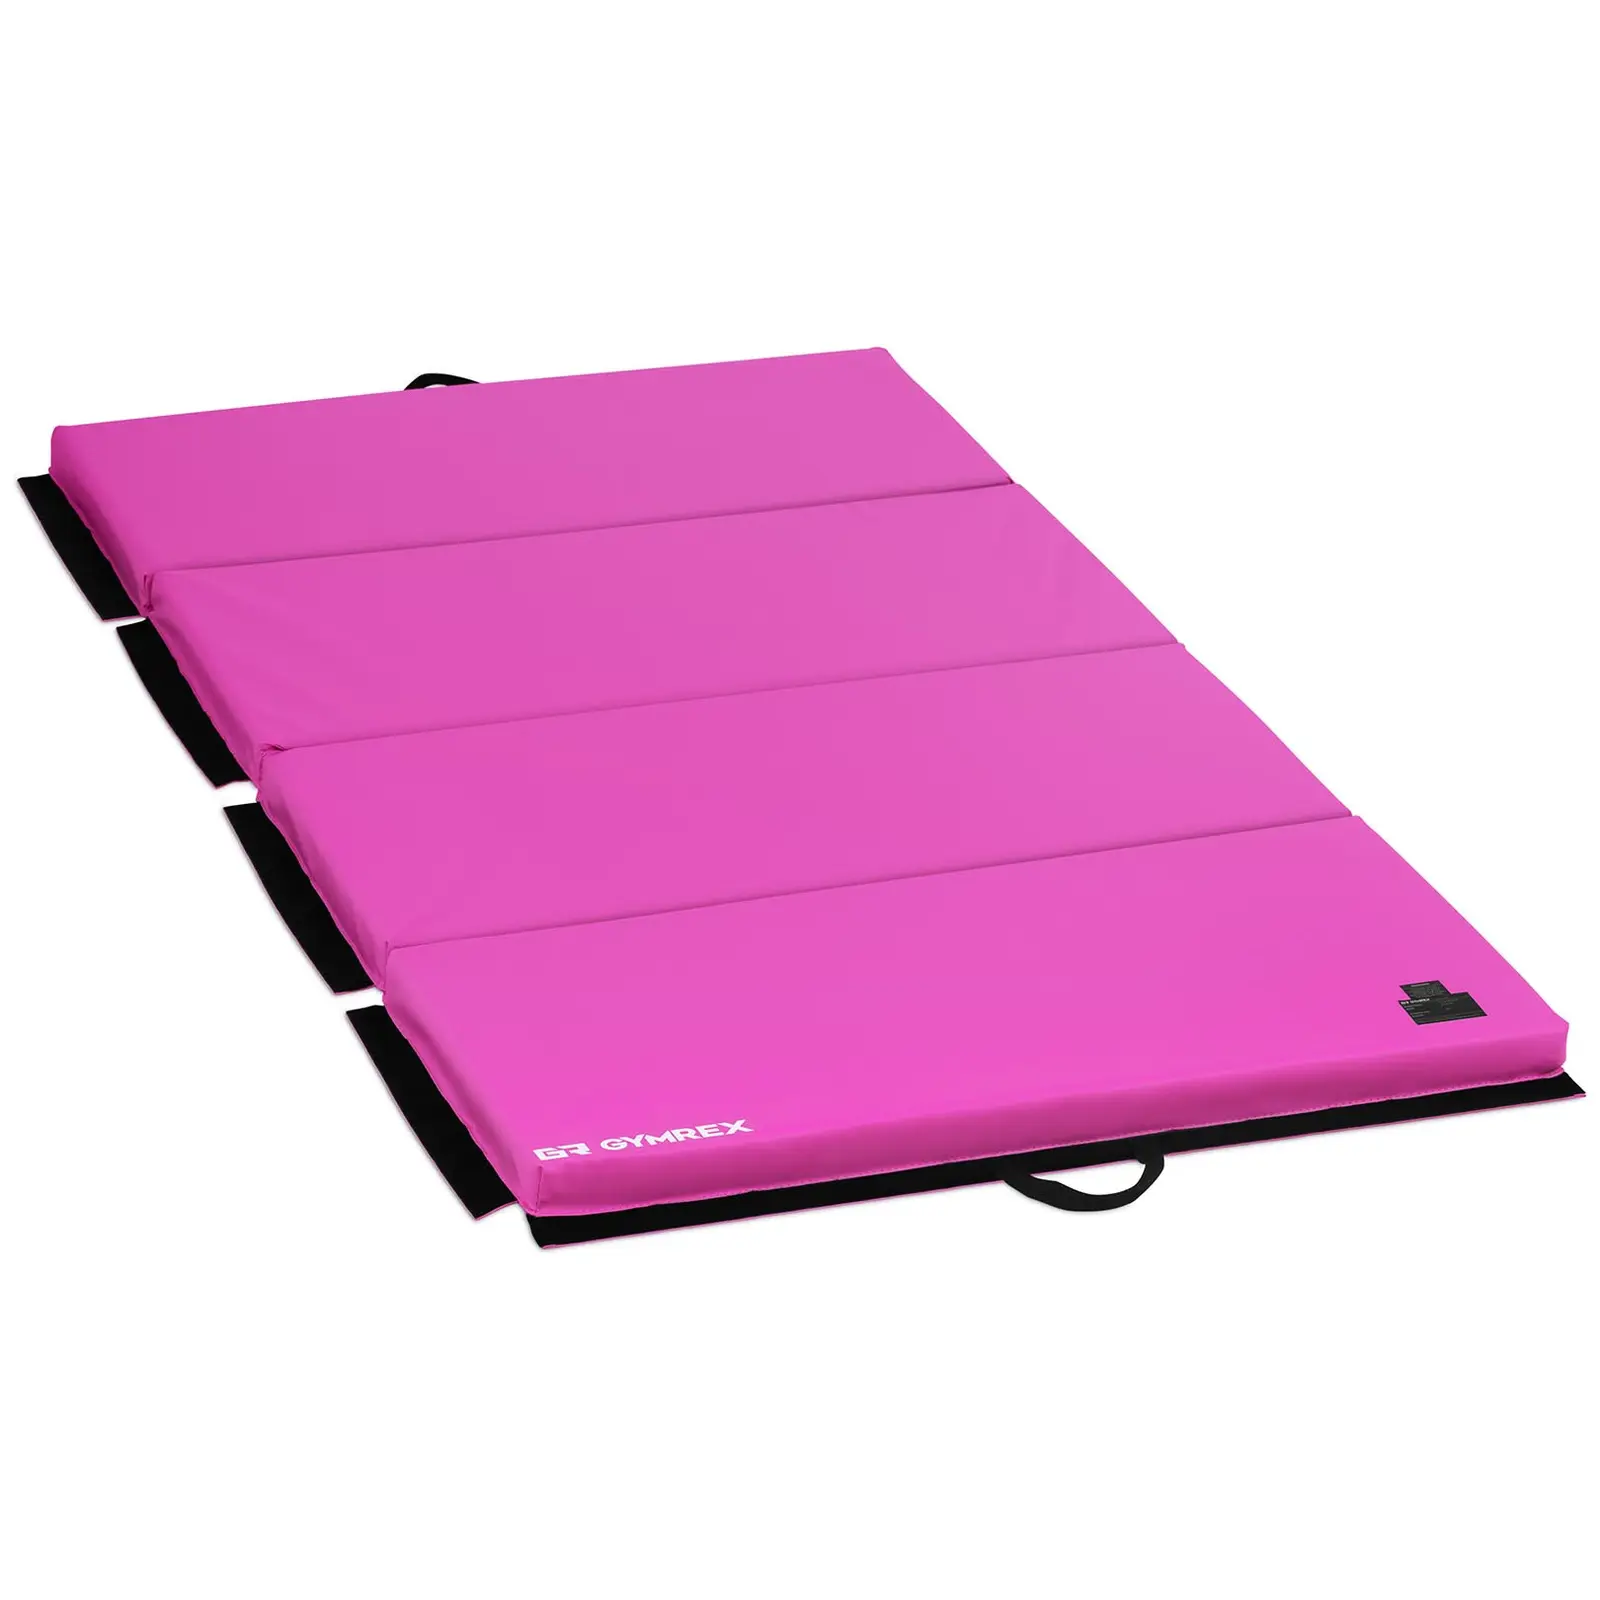 Vikbar gymnastikmatta - 200 x 100 x 5 cm - Pink - Bärvikt 170kg